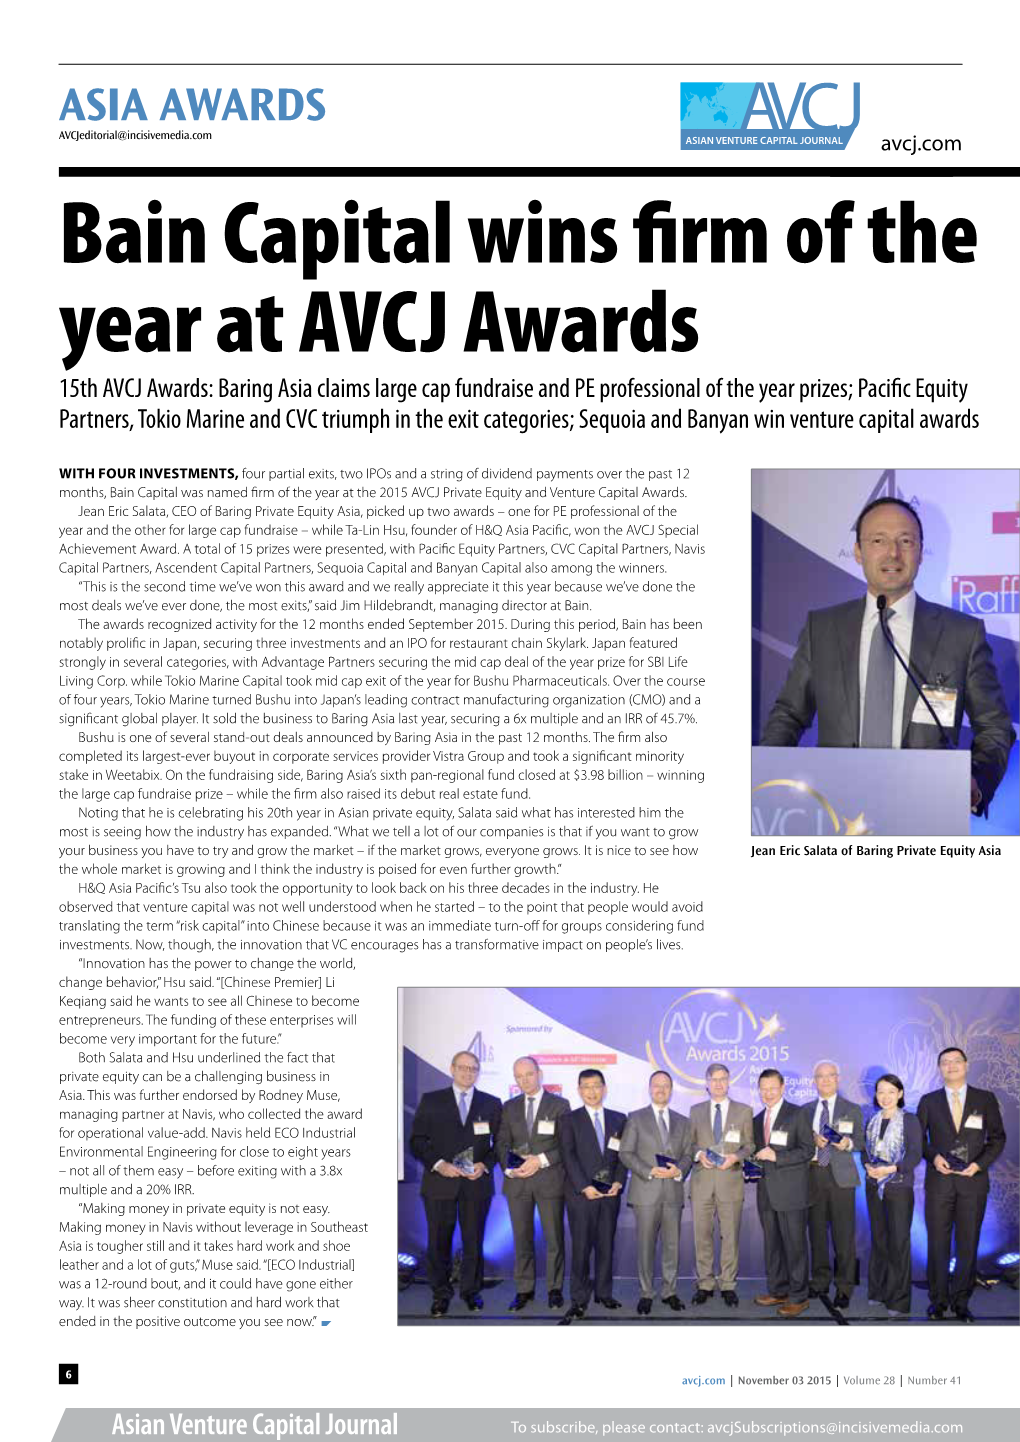 Bain Capital Wins Firm of the Year at AVCJ Awards